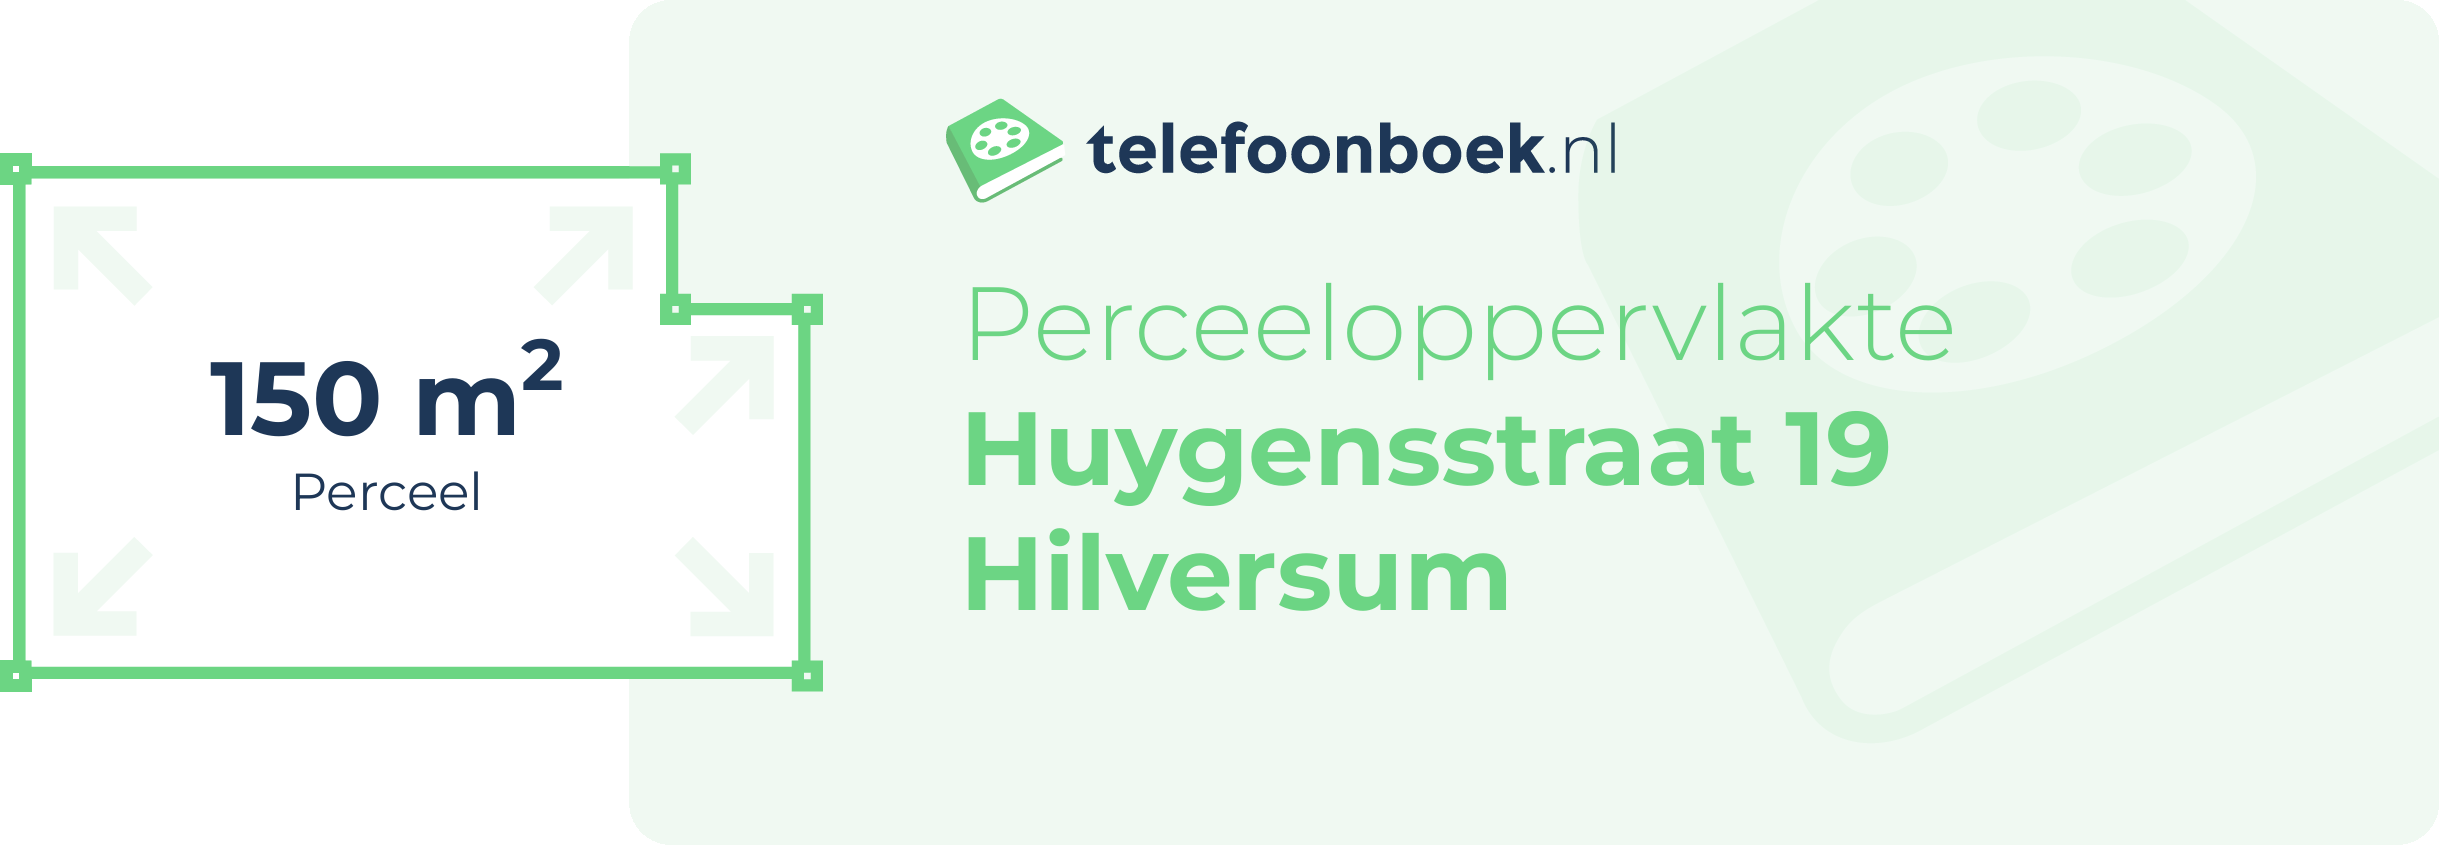 Perceeloppervlakte Huygensstraat 19 Hilversum